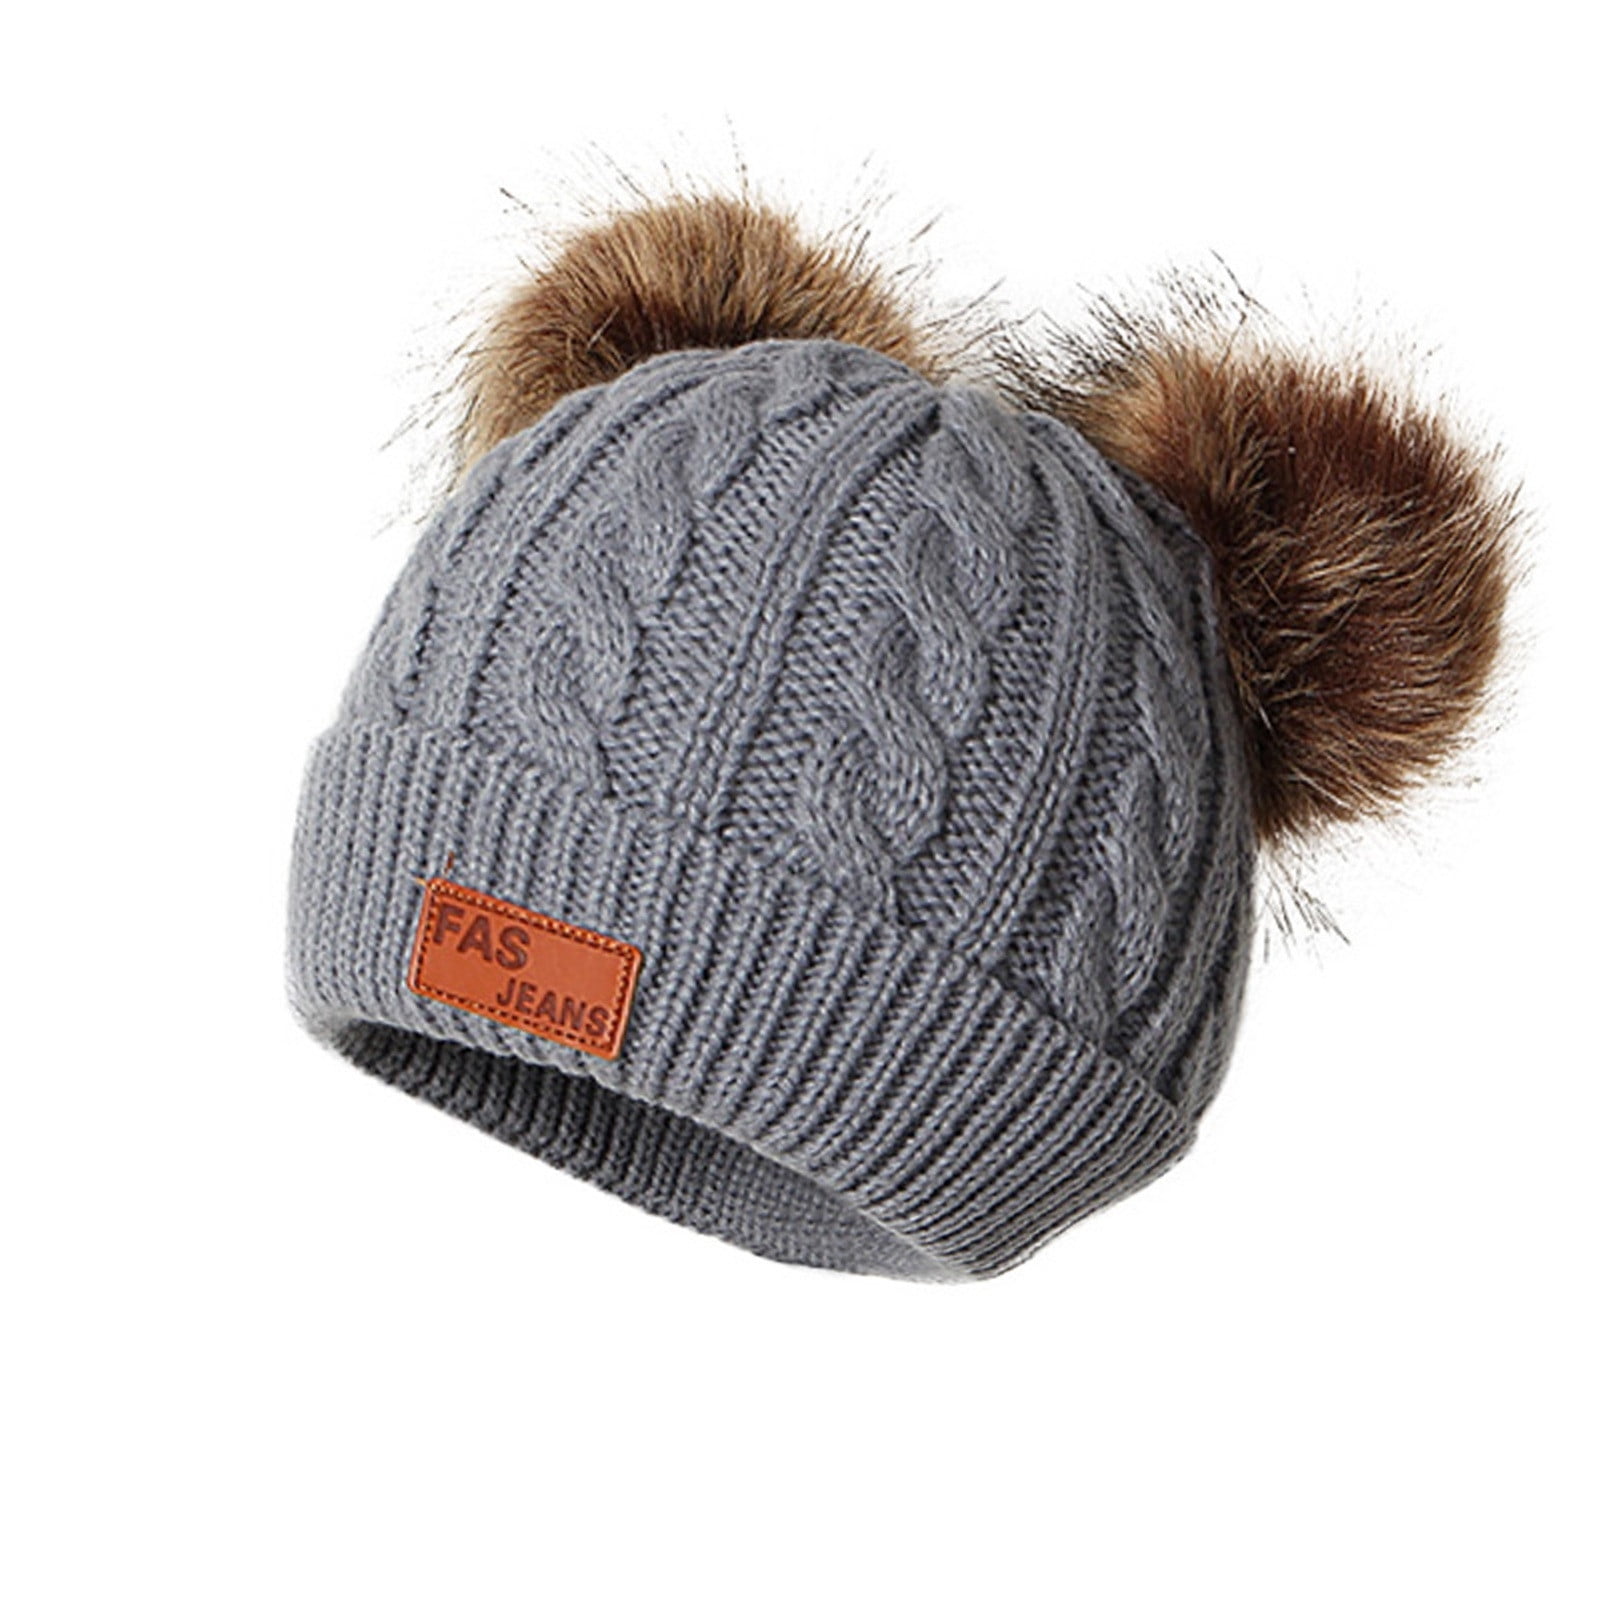 Brown/ Grey baby winter hat Boy 